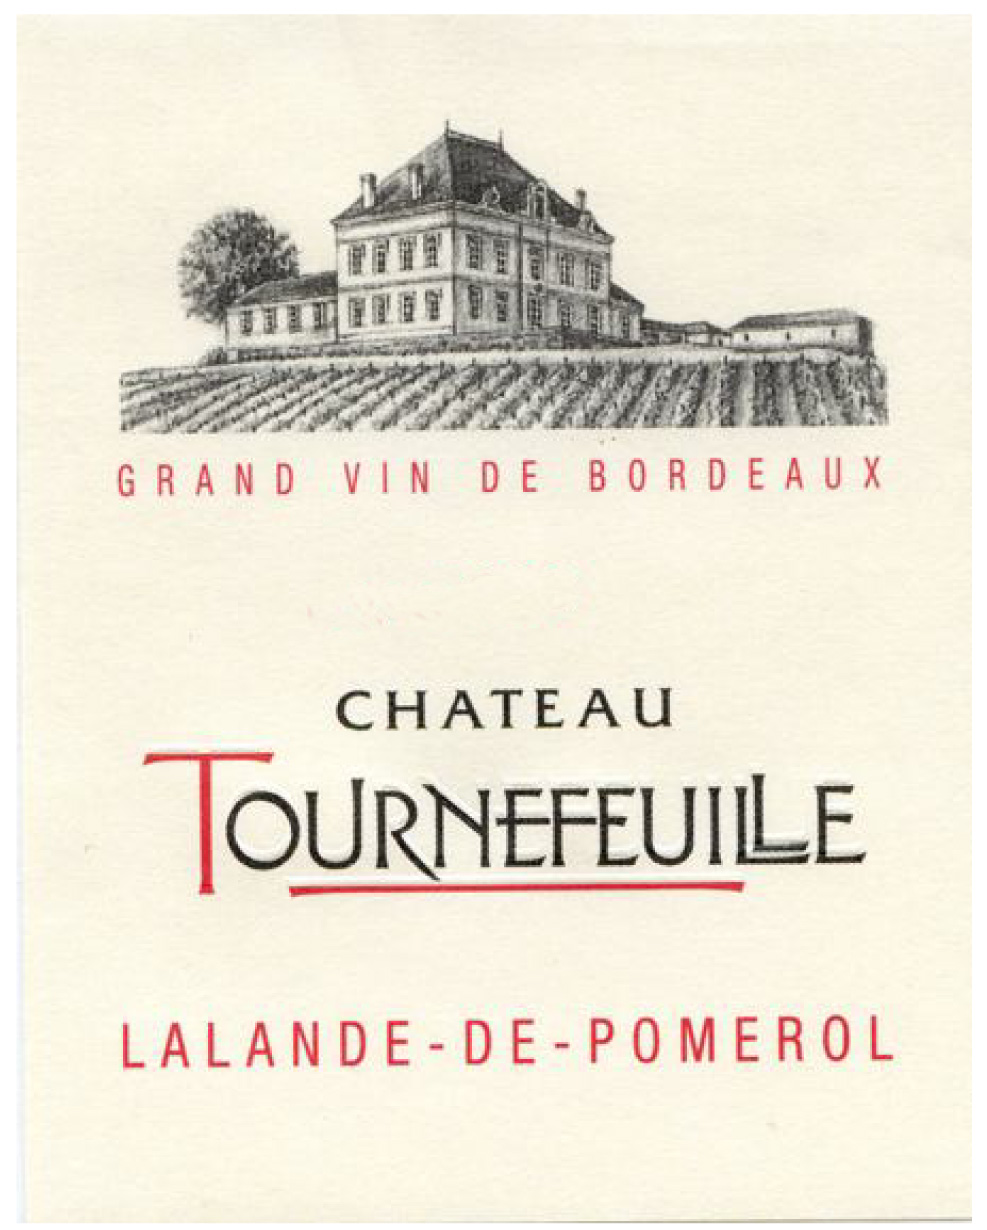 Chateau Tournefeuille label